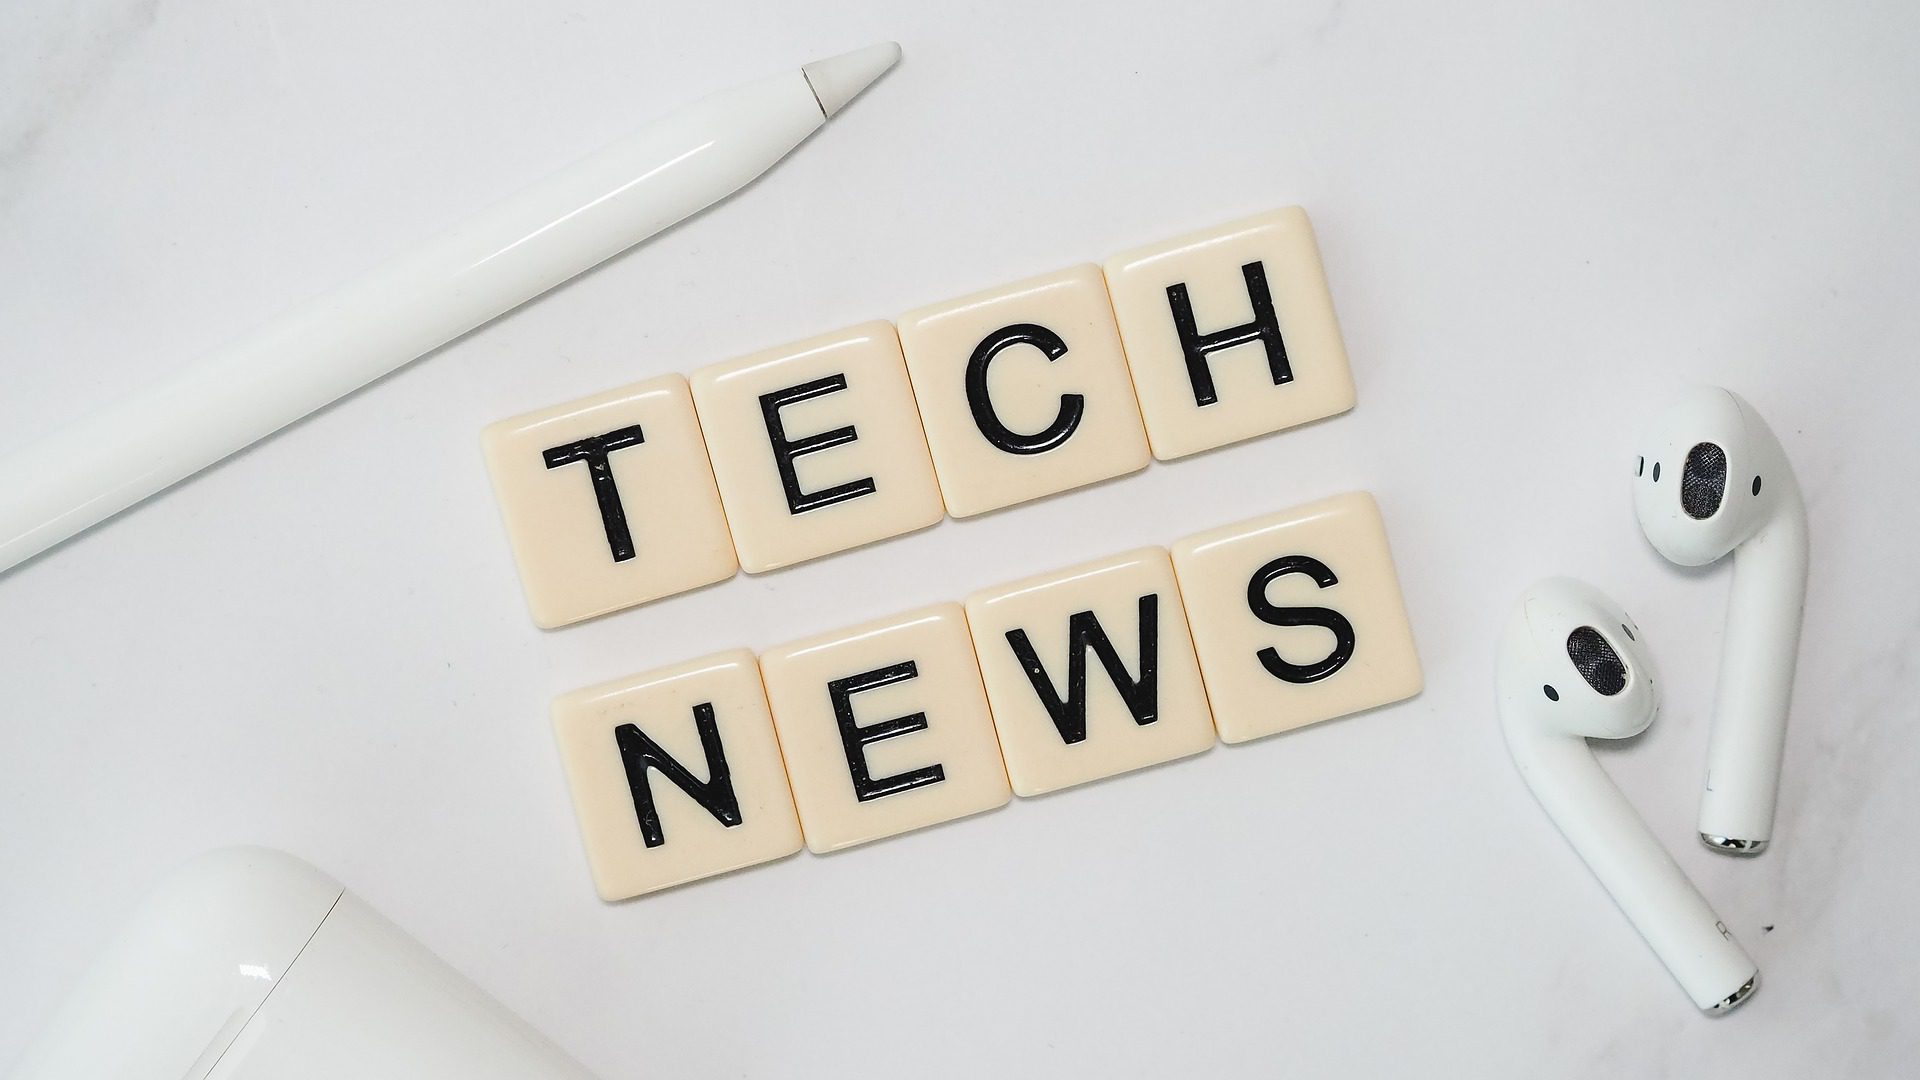 tech news on scrabble tiles